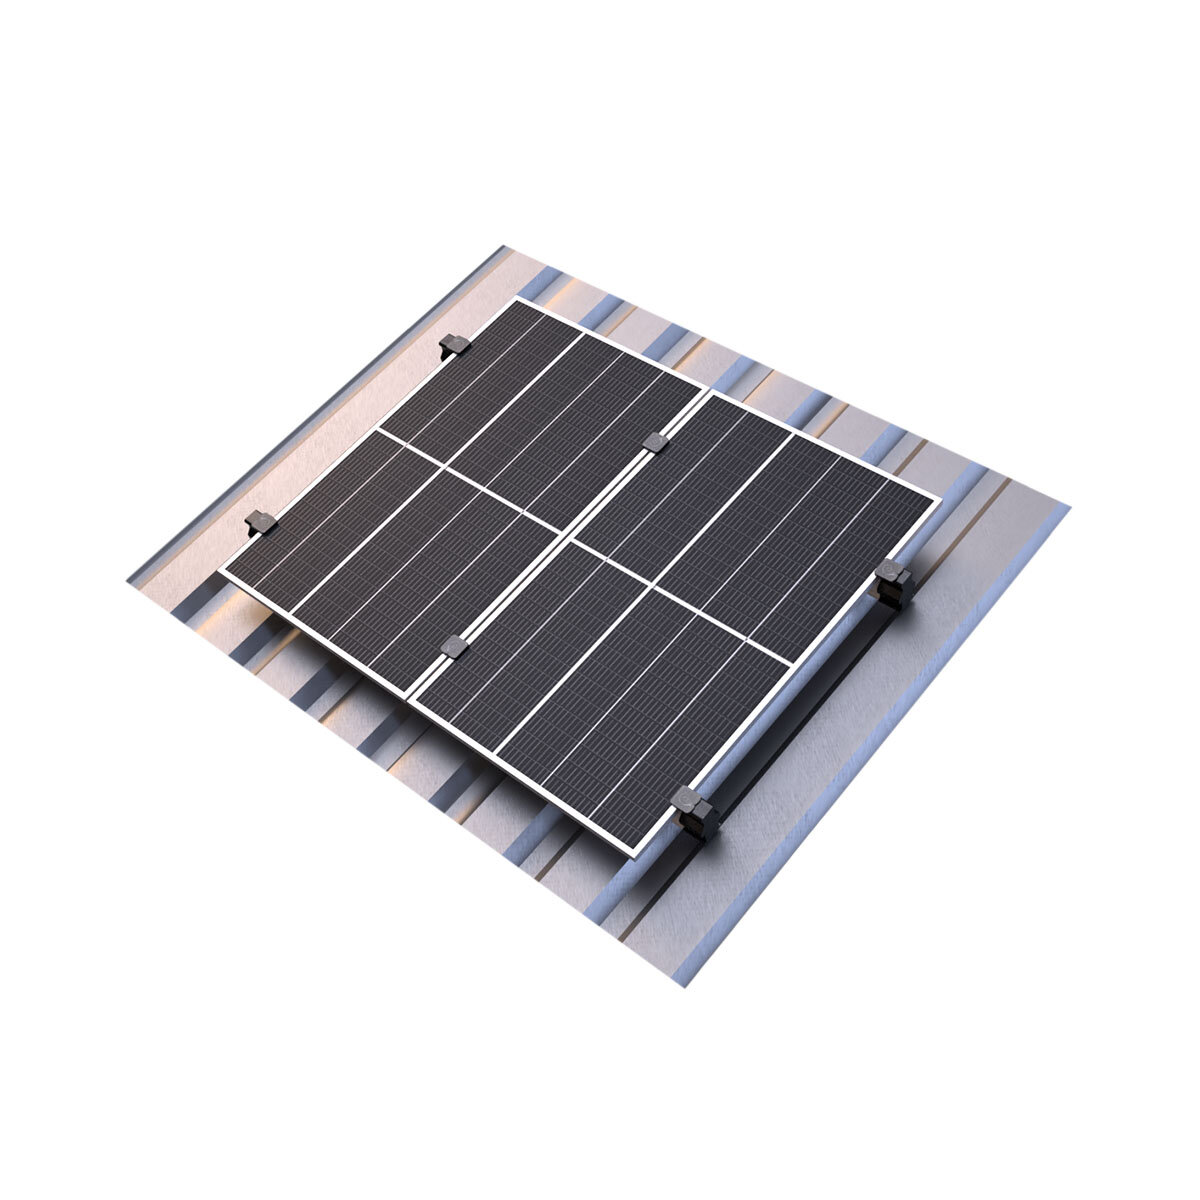 Plug &amp; Play Solar set 2 panelen 800 Watt - Portrait Staaldak 1x2